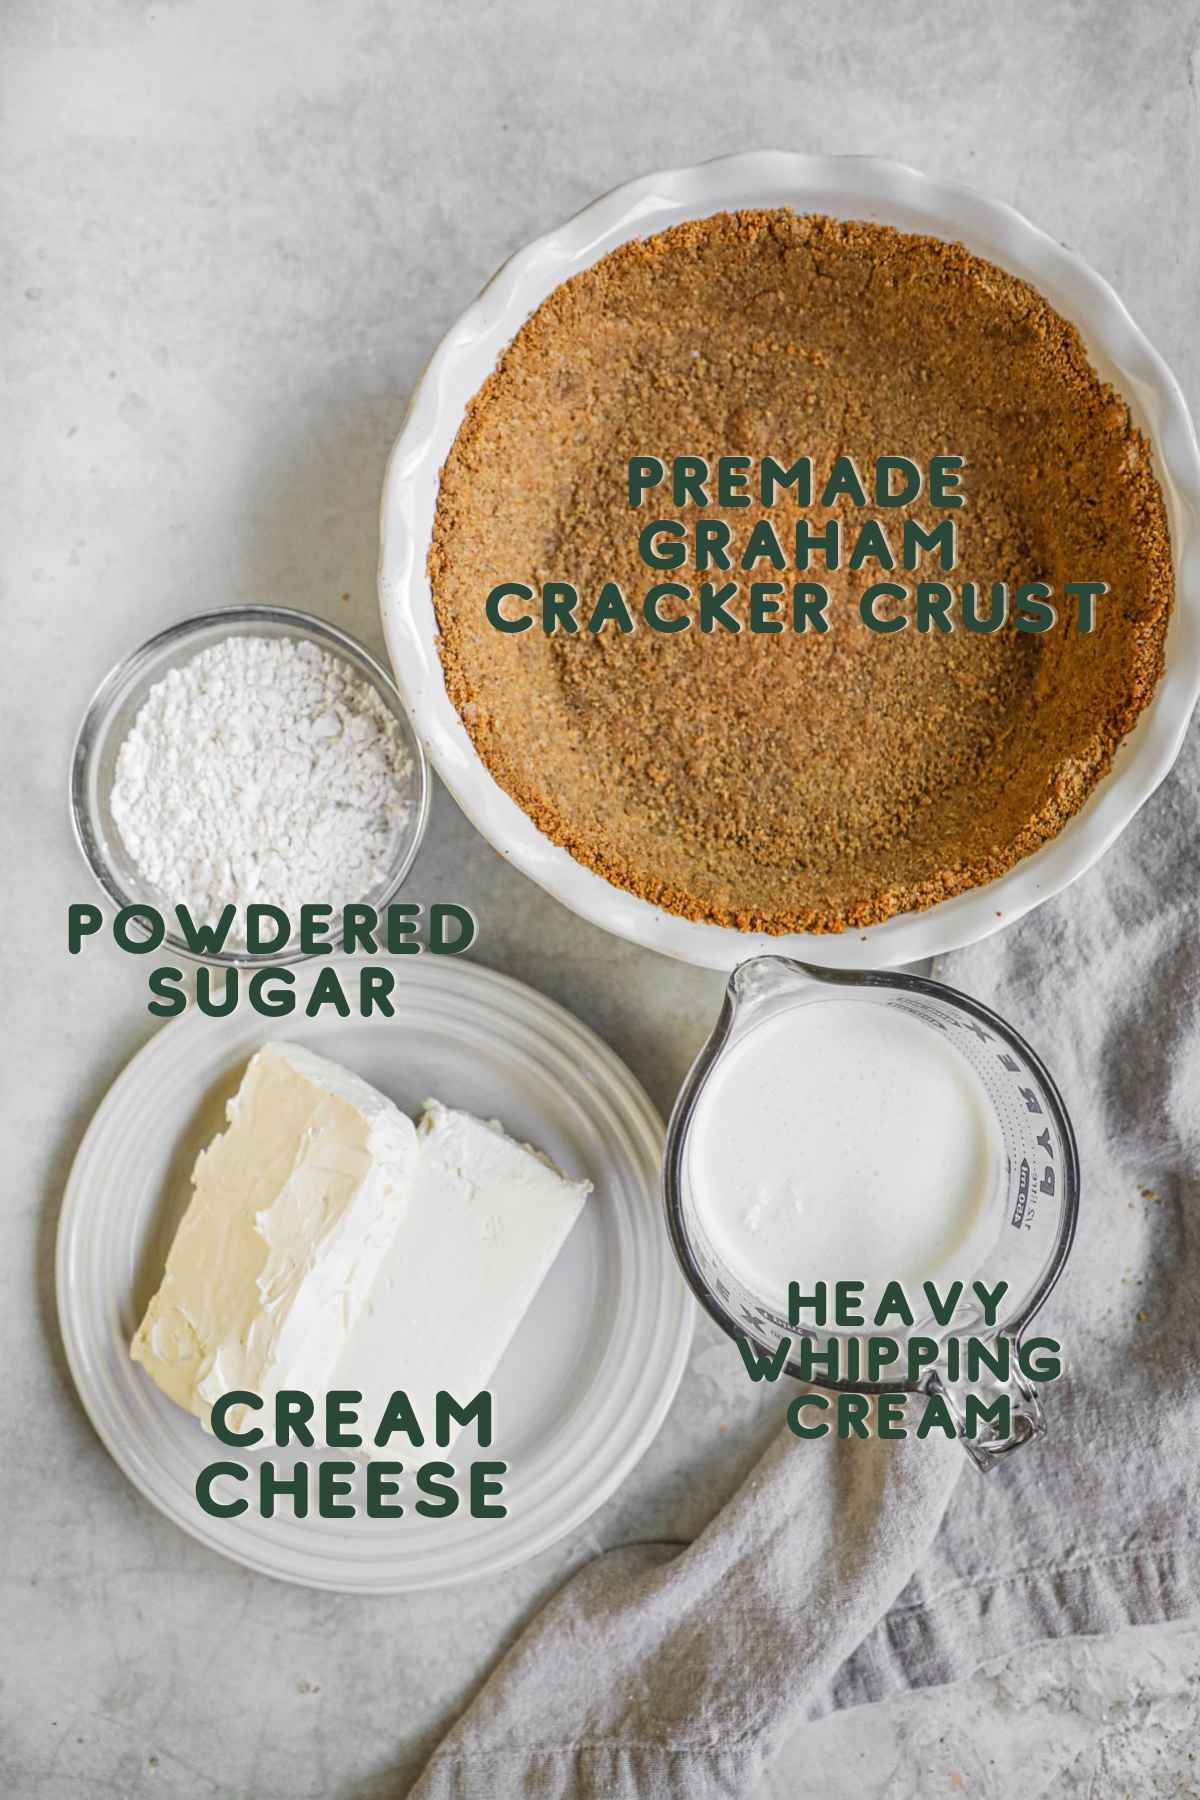 Ingredients to make no bake 3-ingredient cheesecake, premade graham cracker crust, powdered sugar, cream cheese, heavy whipping cream.